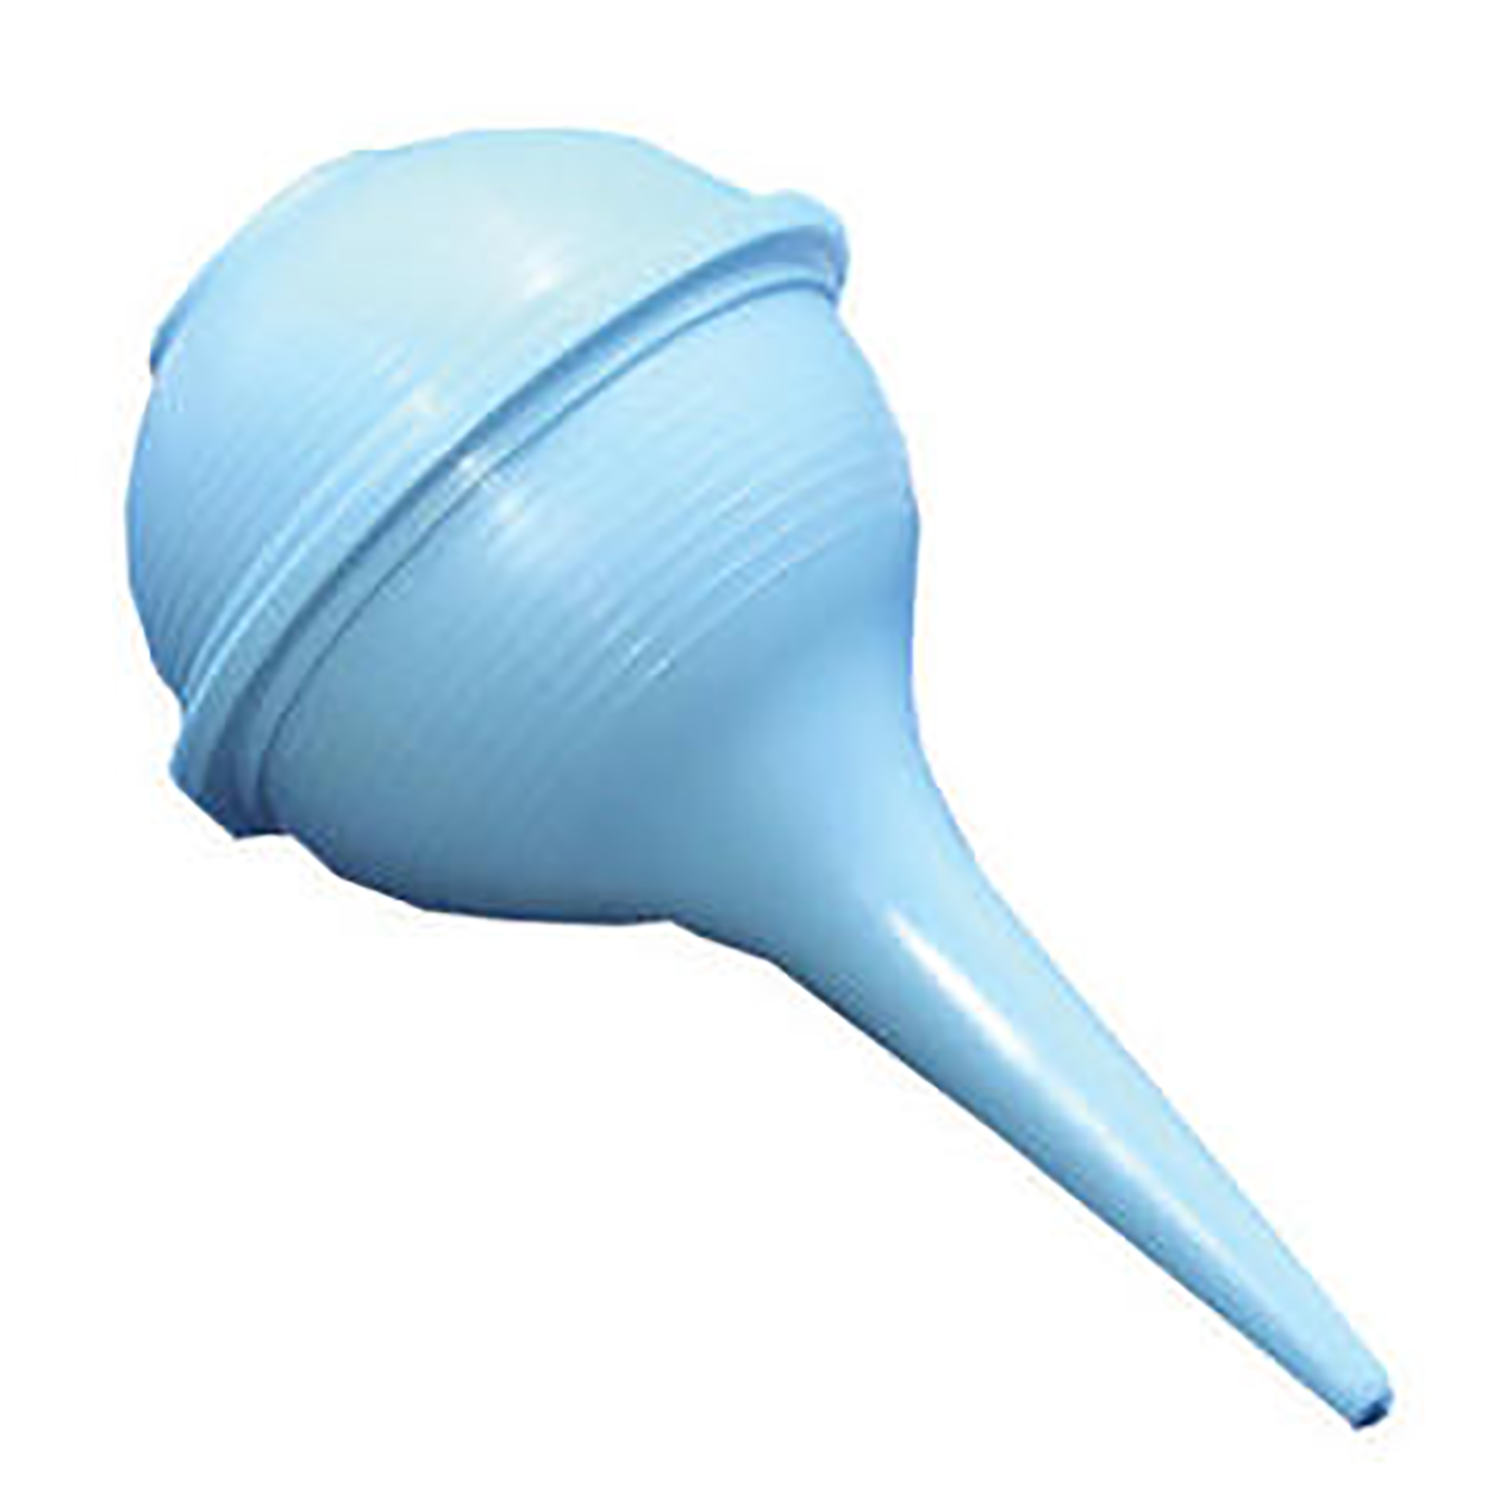 Bulb Syringe (Mucus Extractor) | 2oz | Single